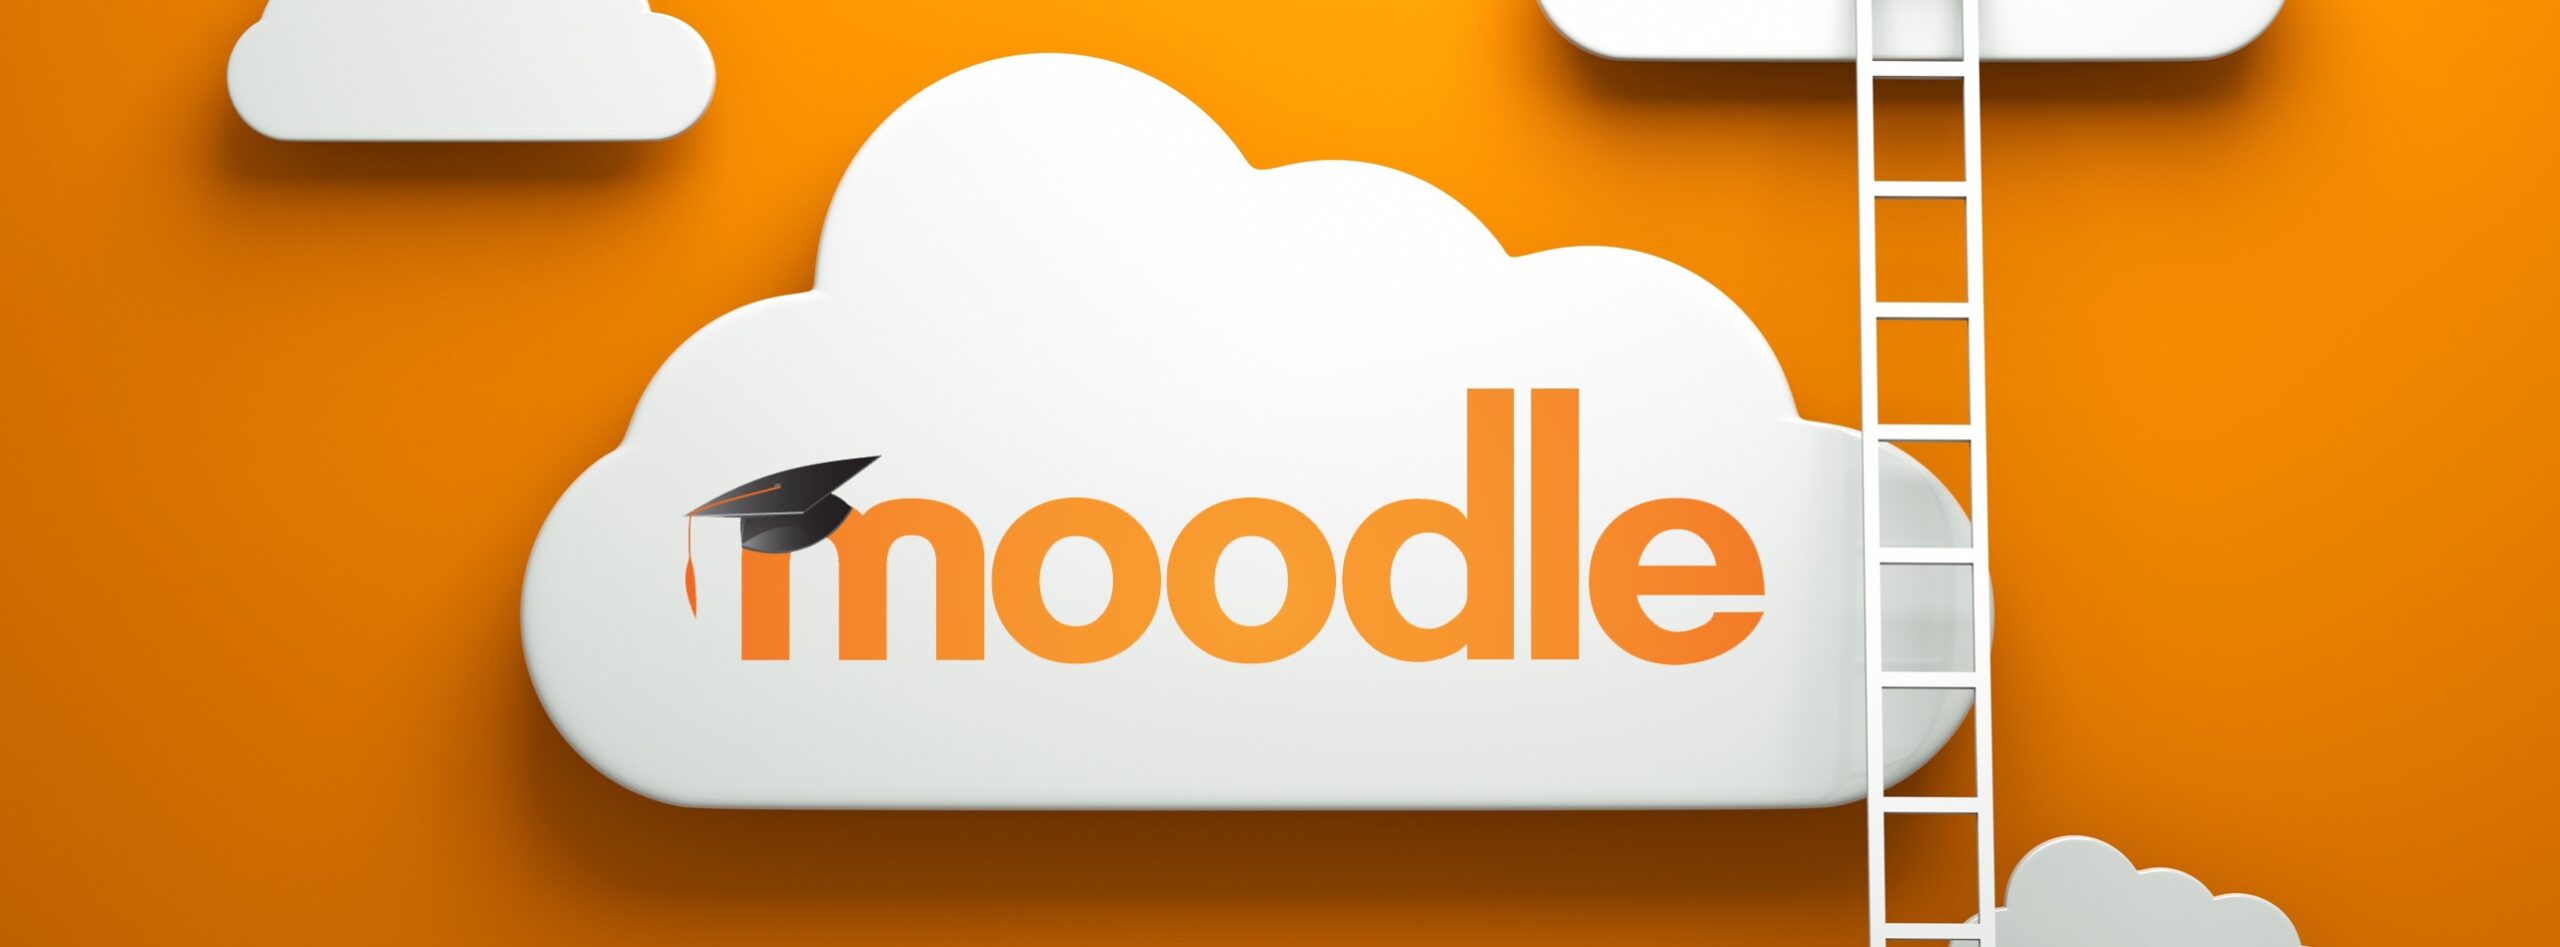 Decorative: Moodle Logo in a cloud